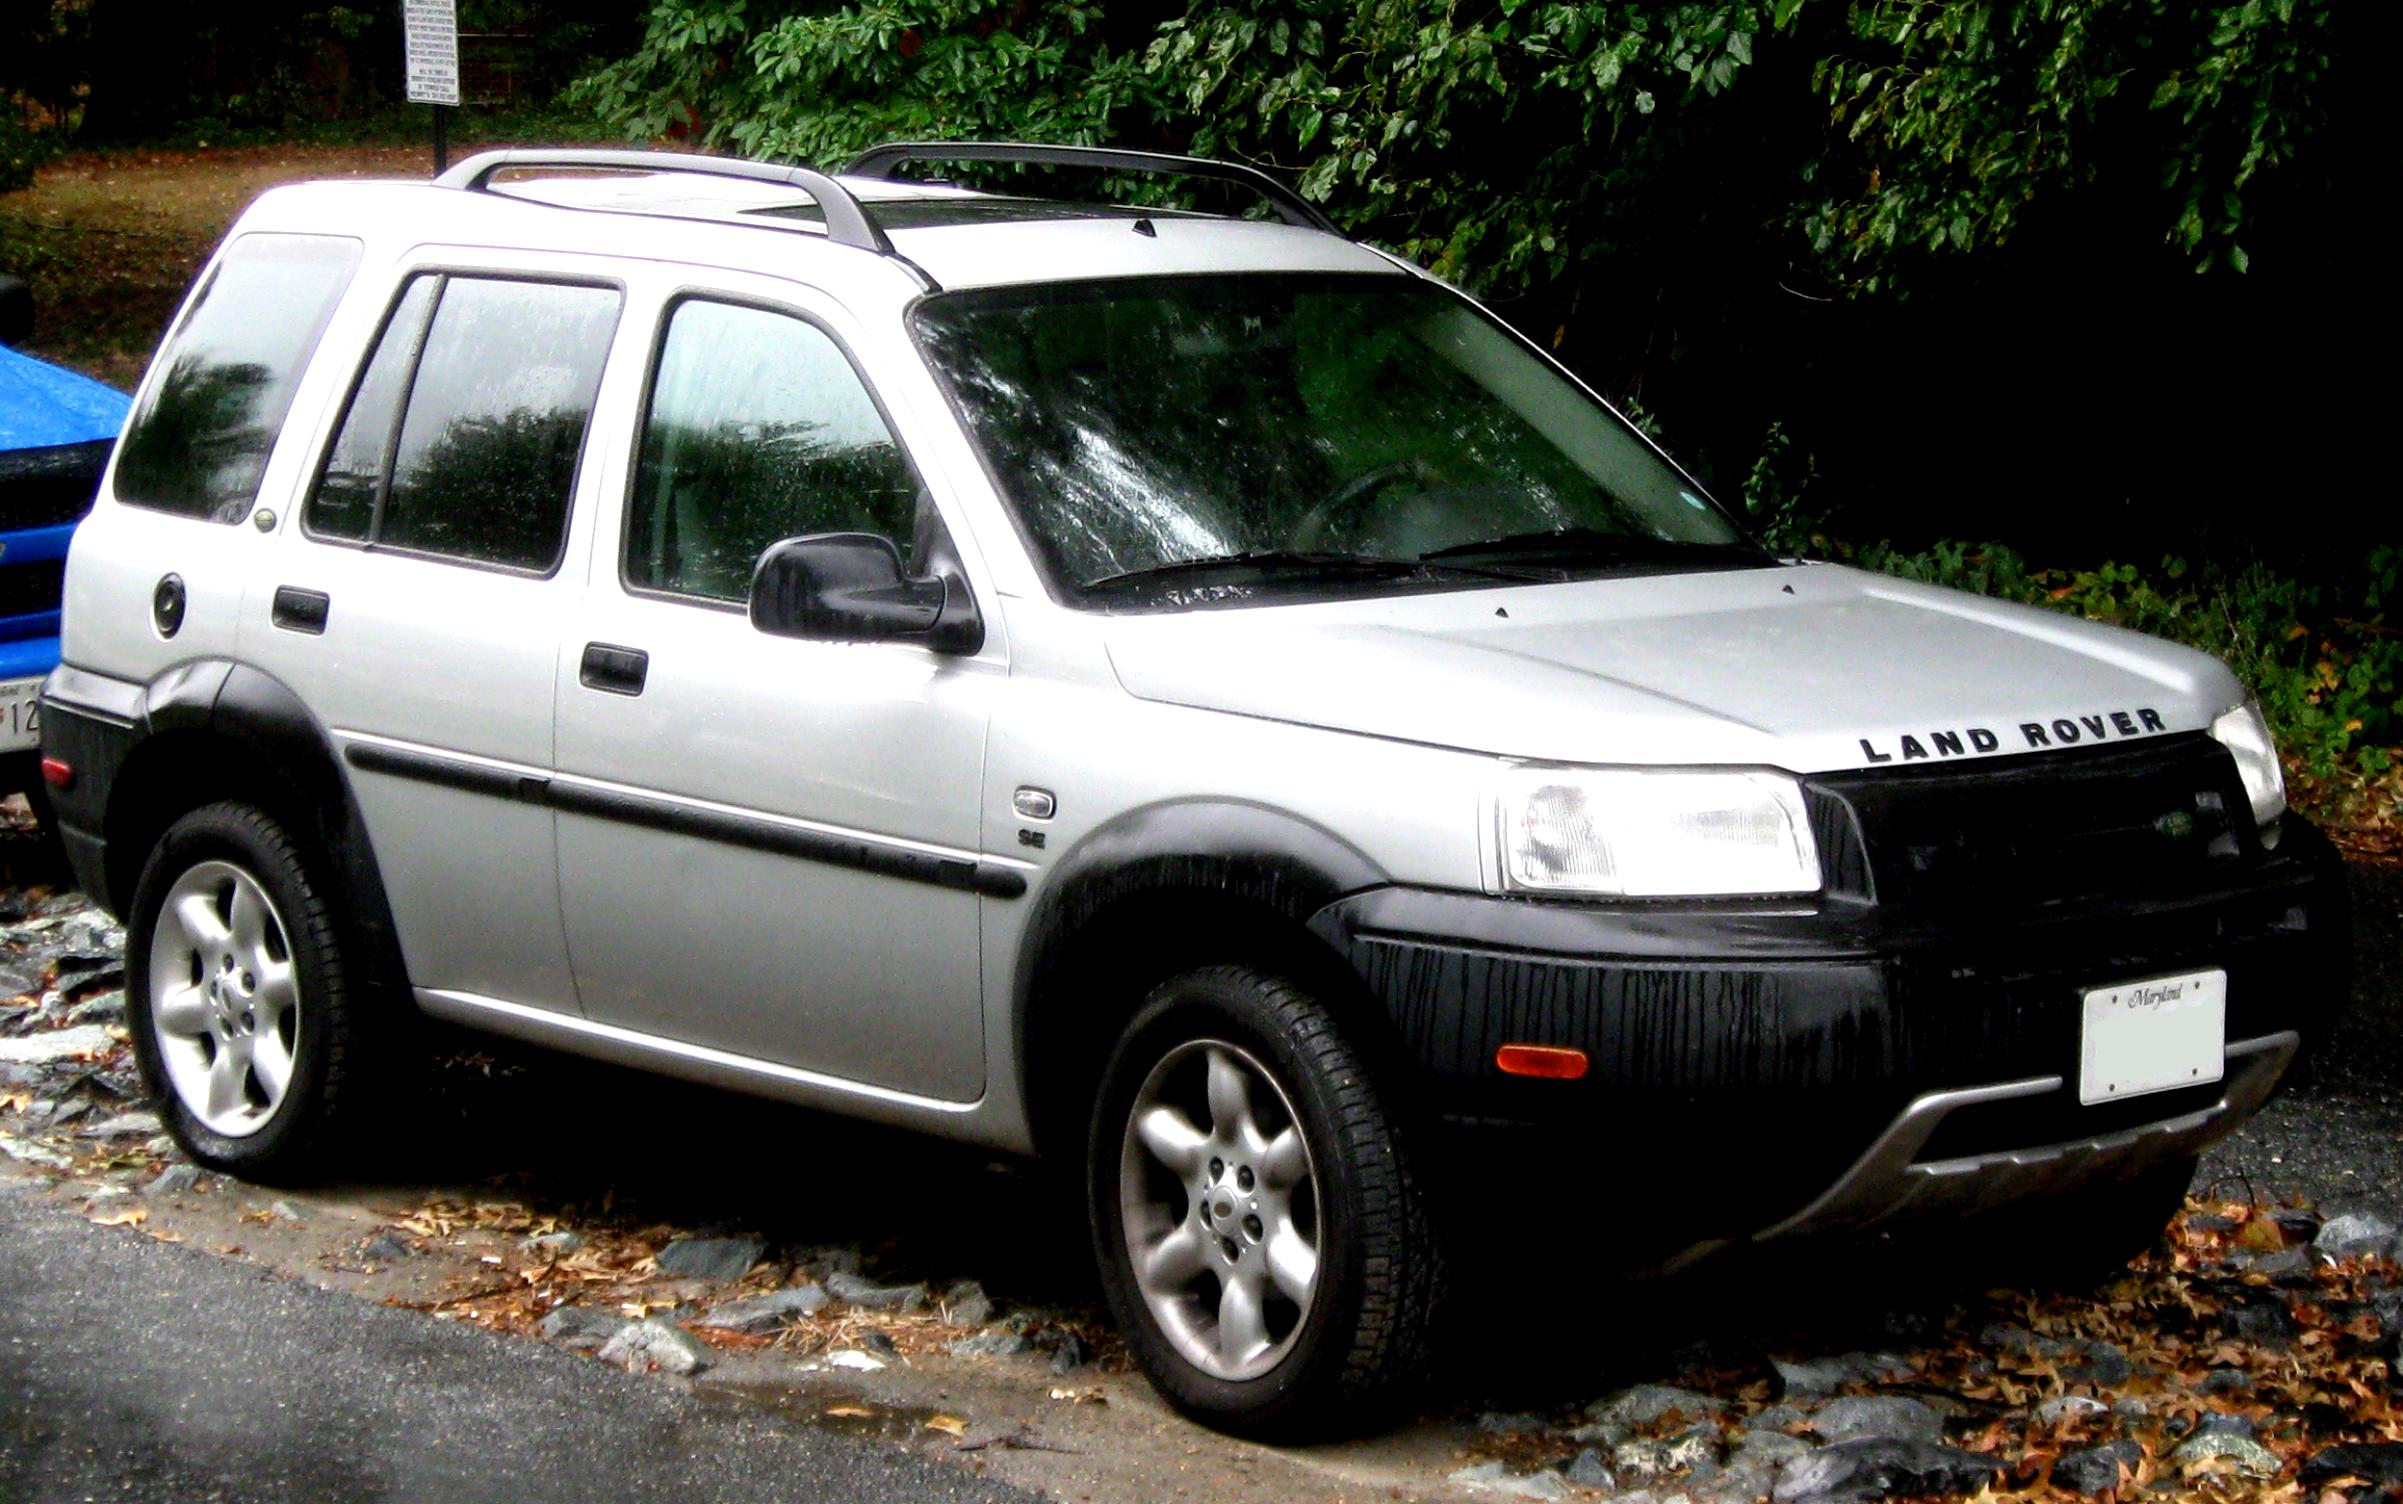 Land Rover Freelander LR2 2006 on